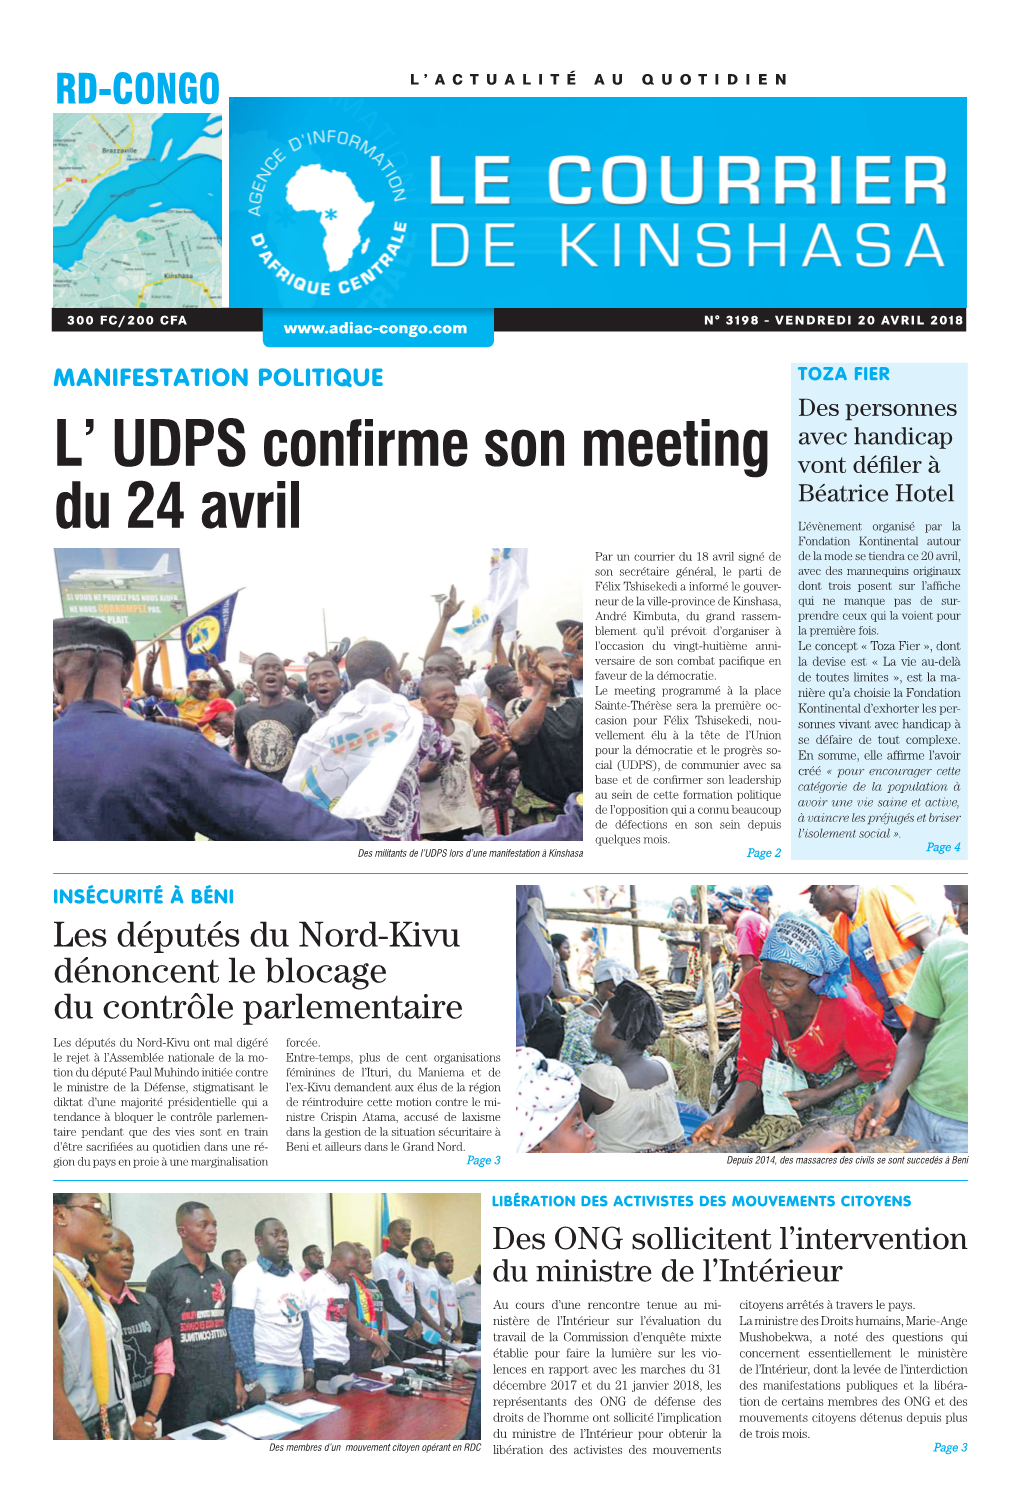 L' UDPS Confirme Son Meeting Du 24 Avril